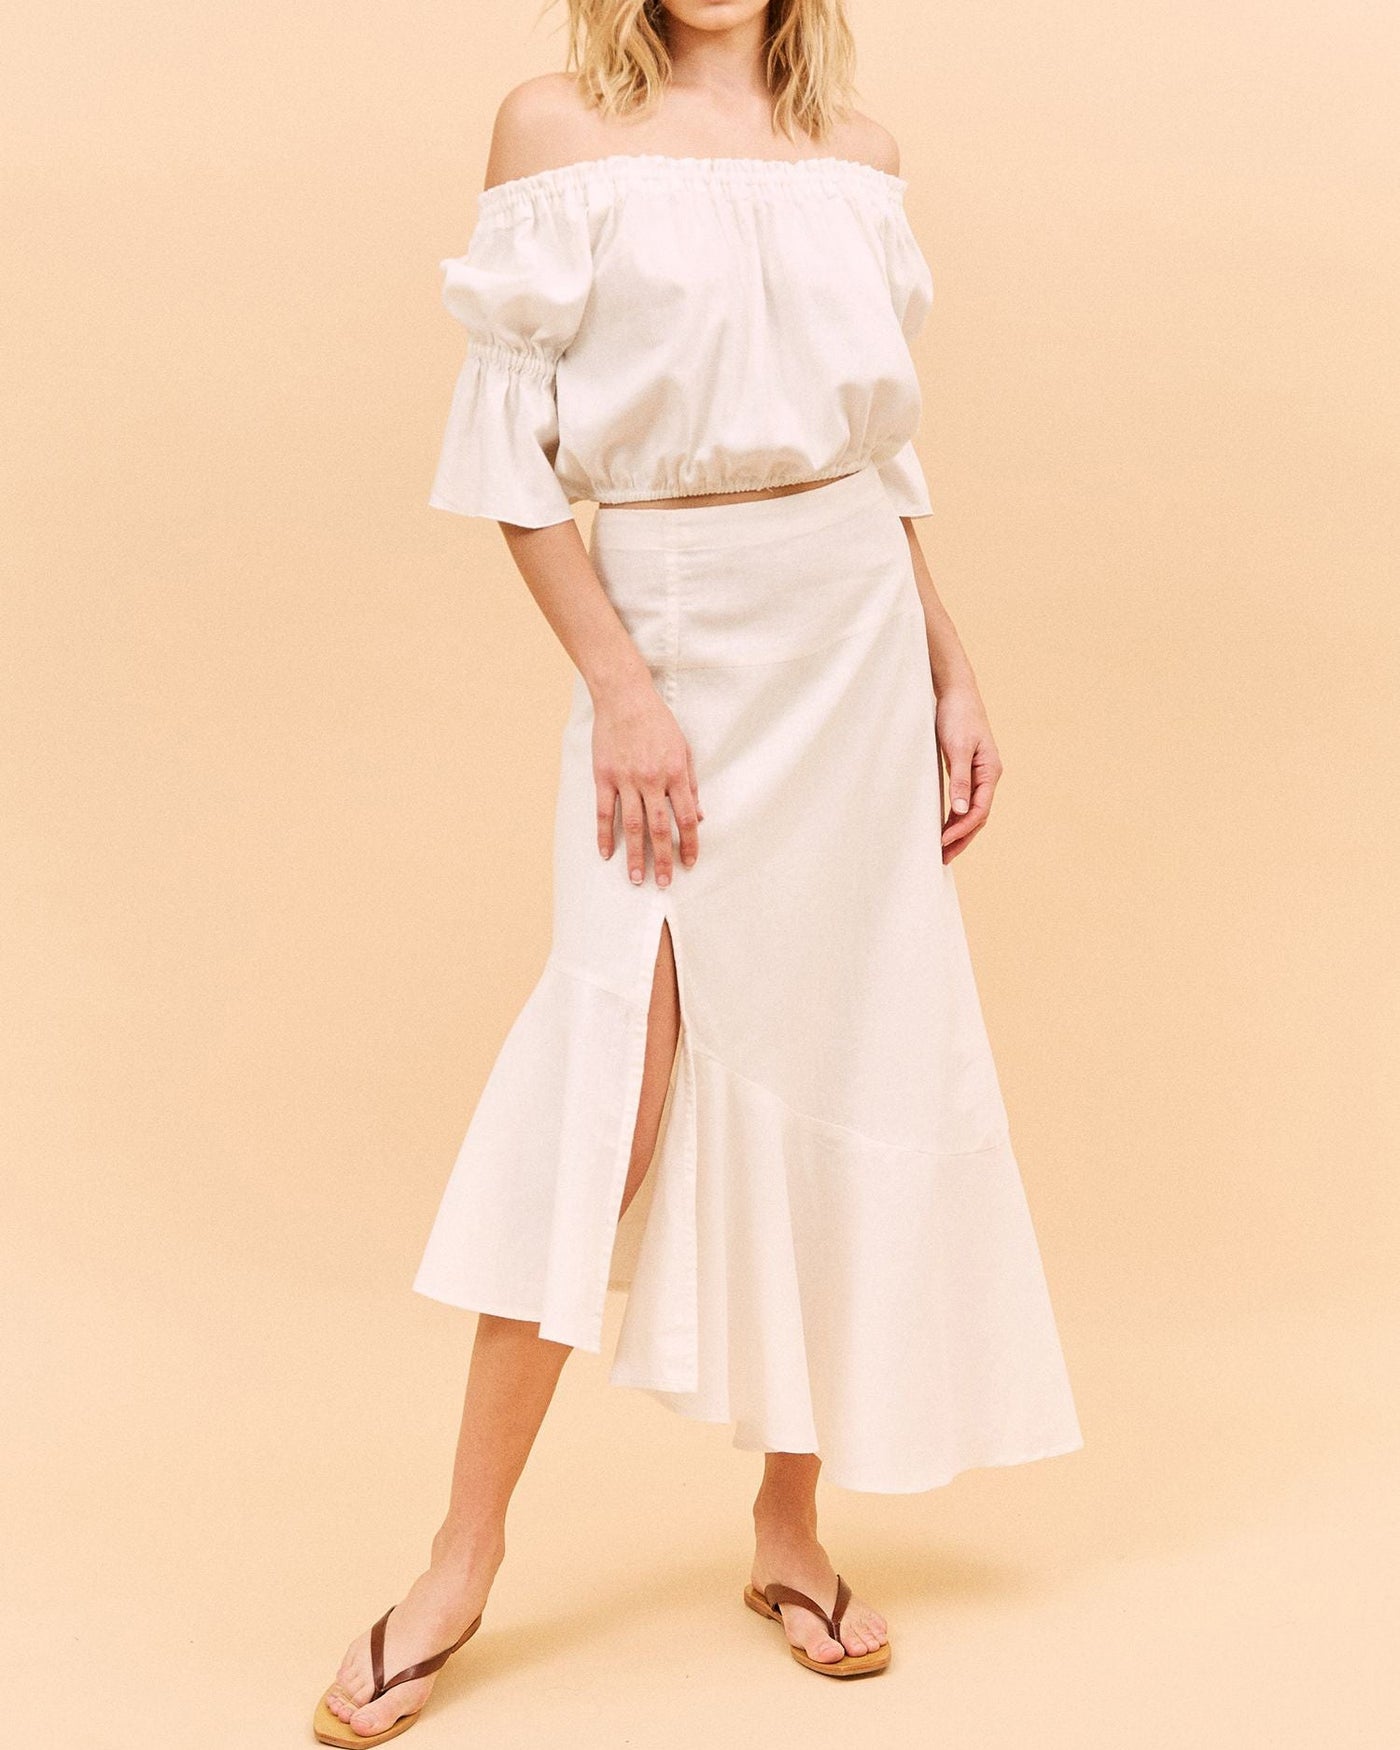 NTG Fad Dress White / S Asymmetric linen dress set